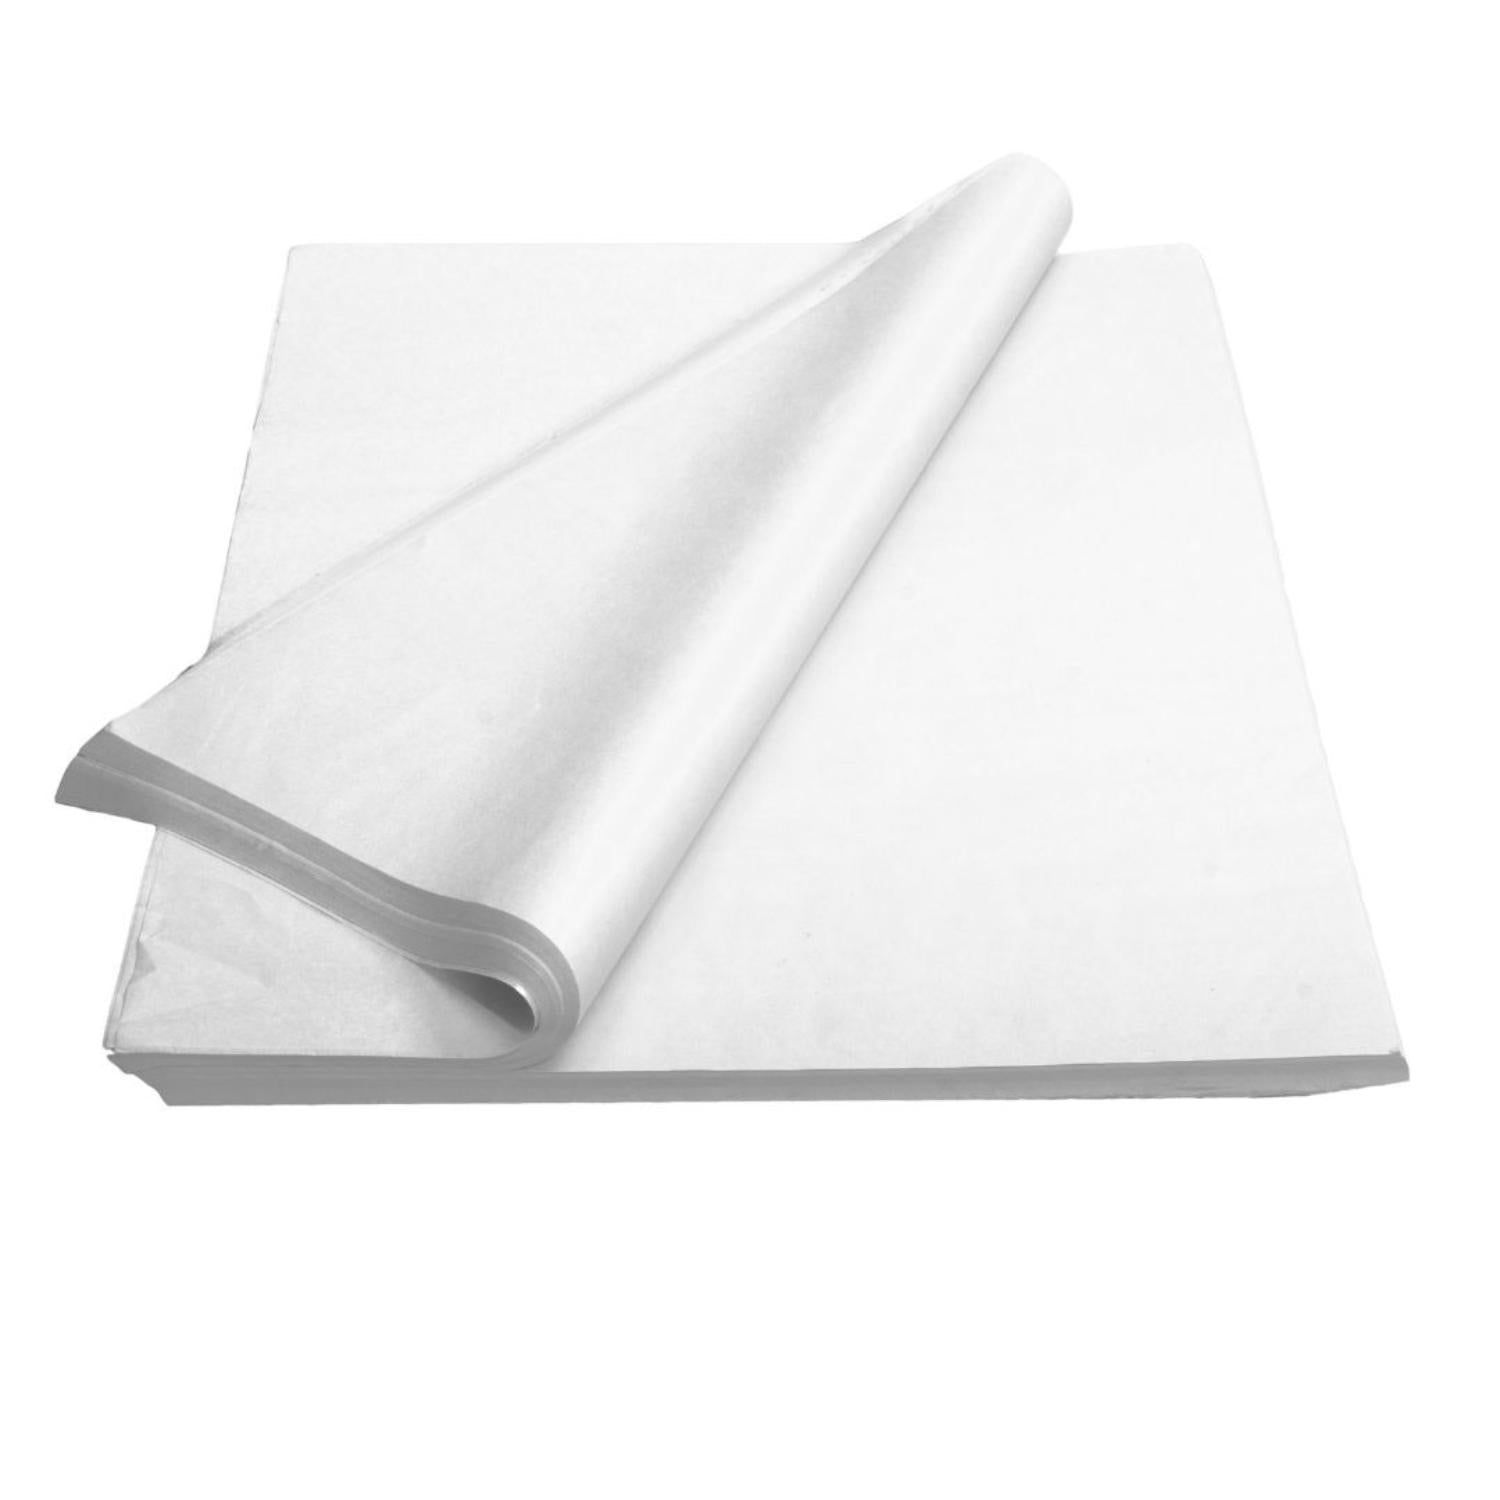 Bulk Silver Tissue Paper | 20x30 inch | 480 Sheets